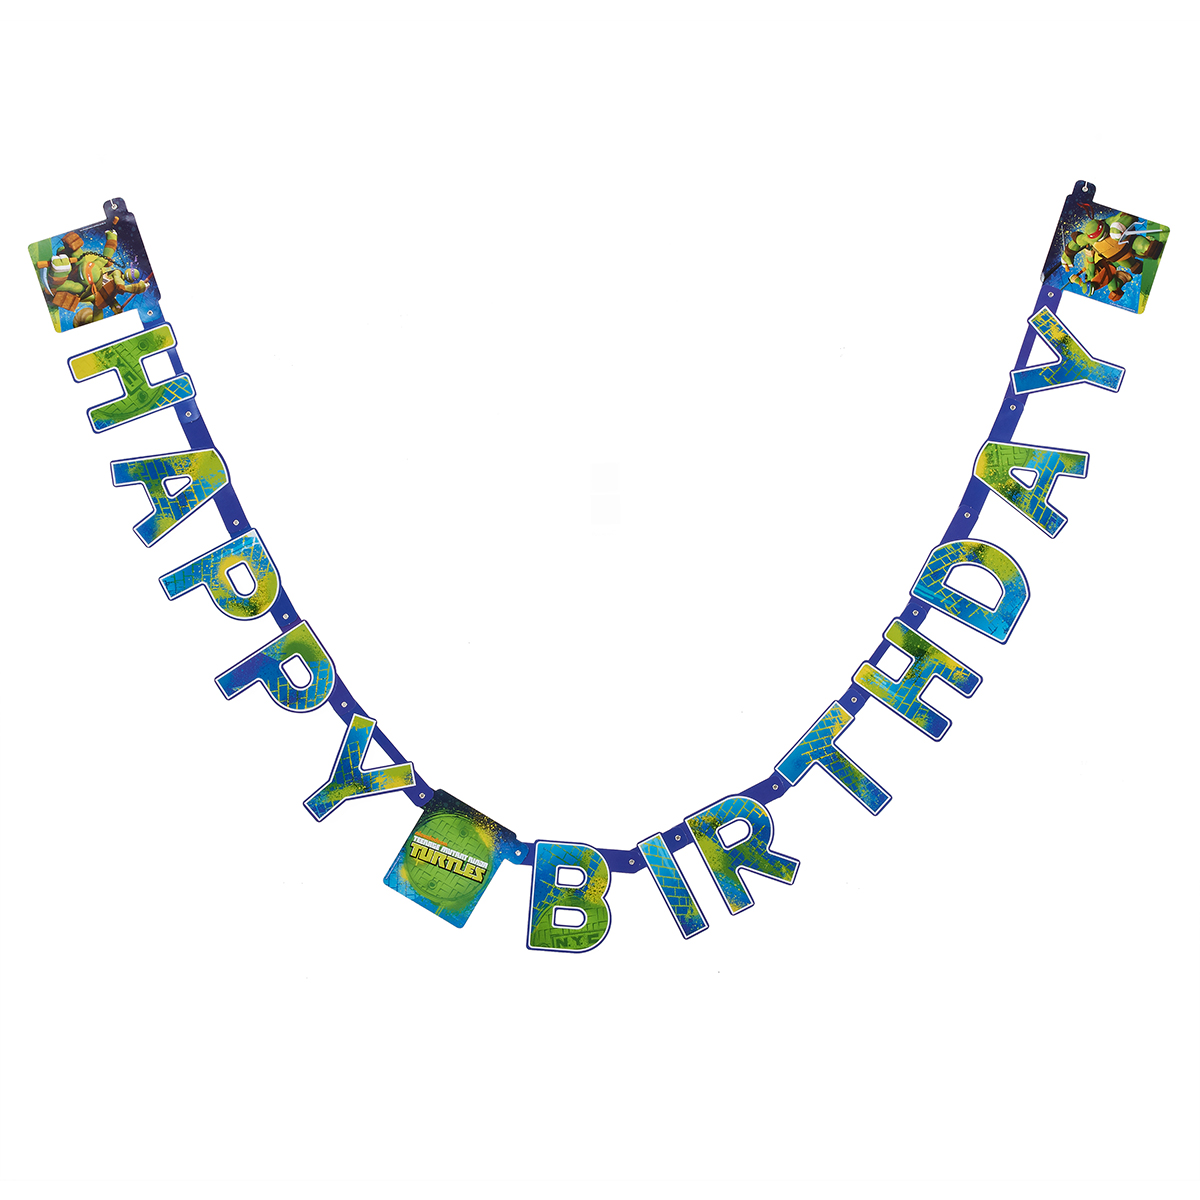 Teenage Mutant Ninja Turtles Birthday Party Banner, Party Supplies - image 1 of 2